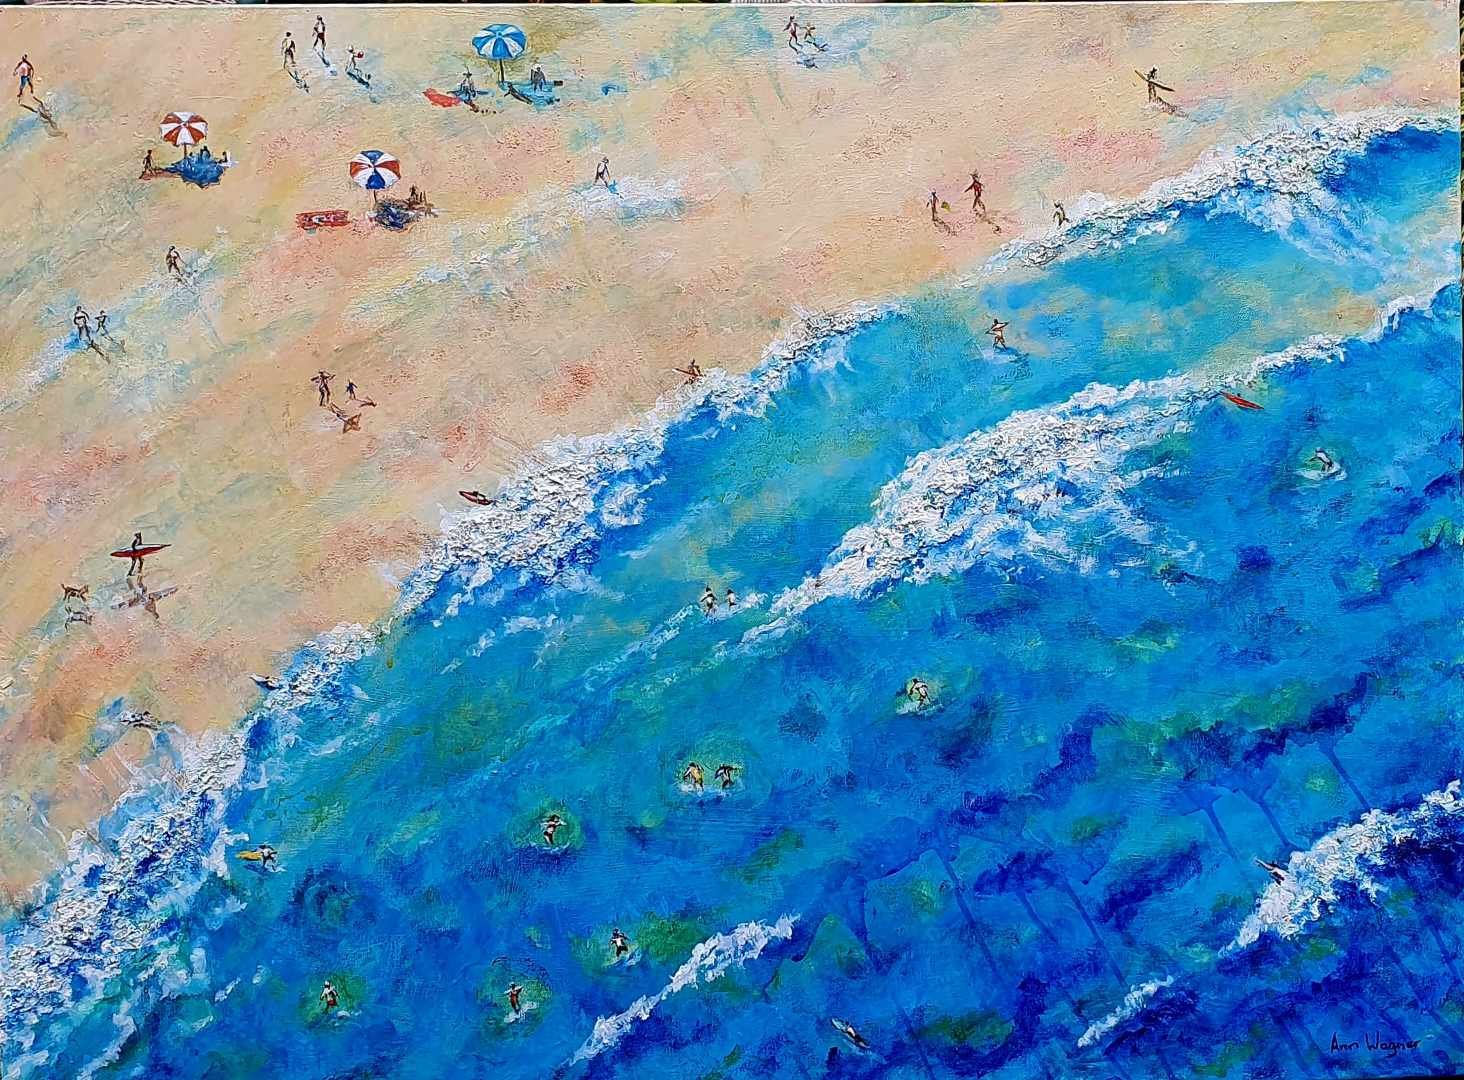 Summertime at the Beach - 101 cm x 76 cm - $980